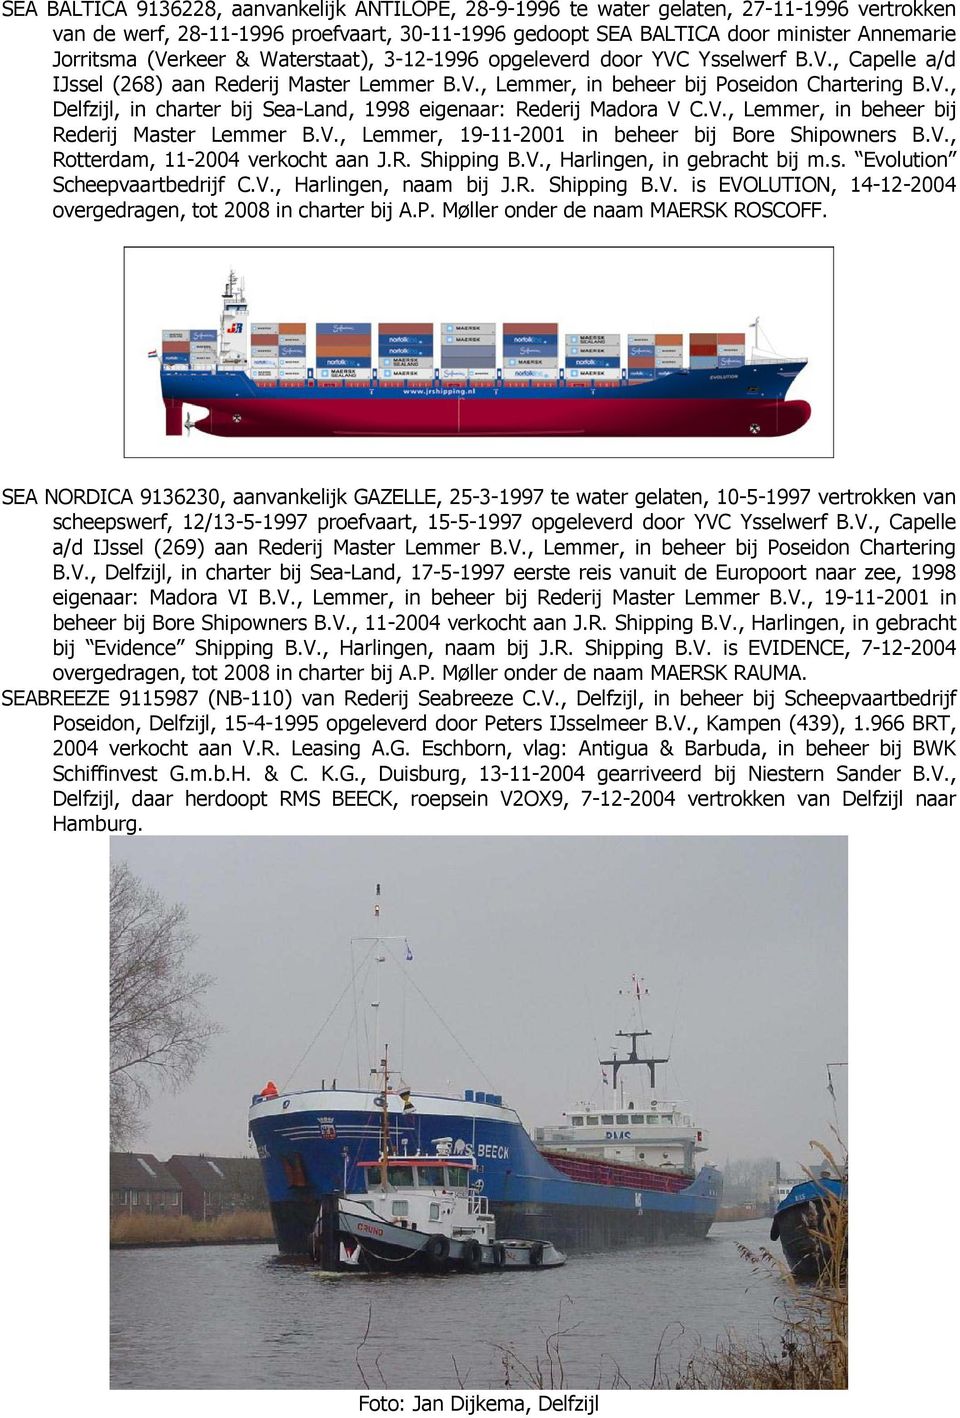 V., Lemmer, in beheer bij Rederij Master Lemmer B.V., Lemmer, 19-11-2001 in beheer bij Bore Shipowners B.V., Rotterdam, 11-2004 verkocht aan J.R. Shipping B.V., Harlingen, in gebracht bij m.s. Evolution Scheepvaartbedrijf C.